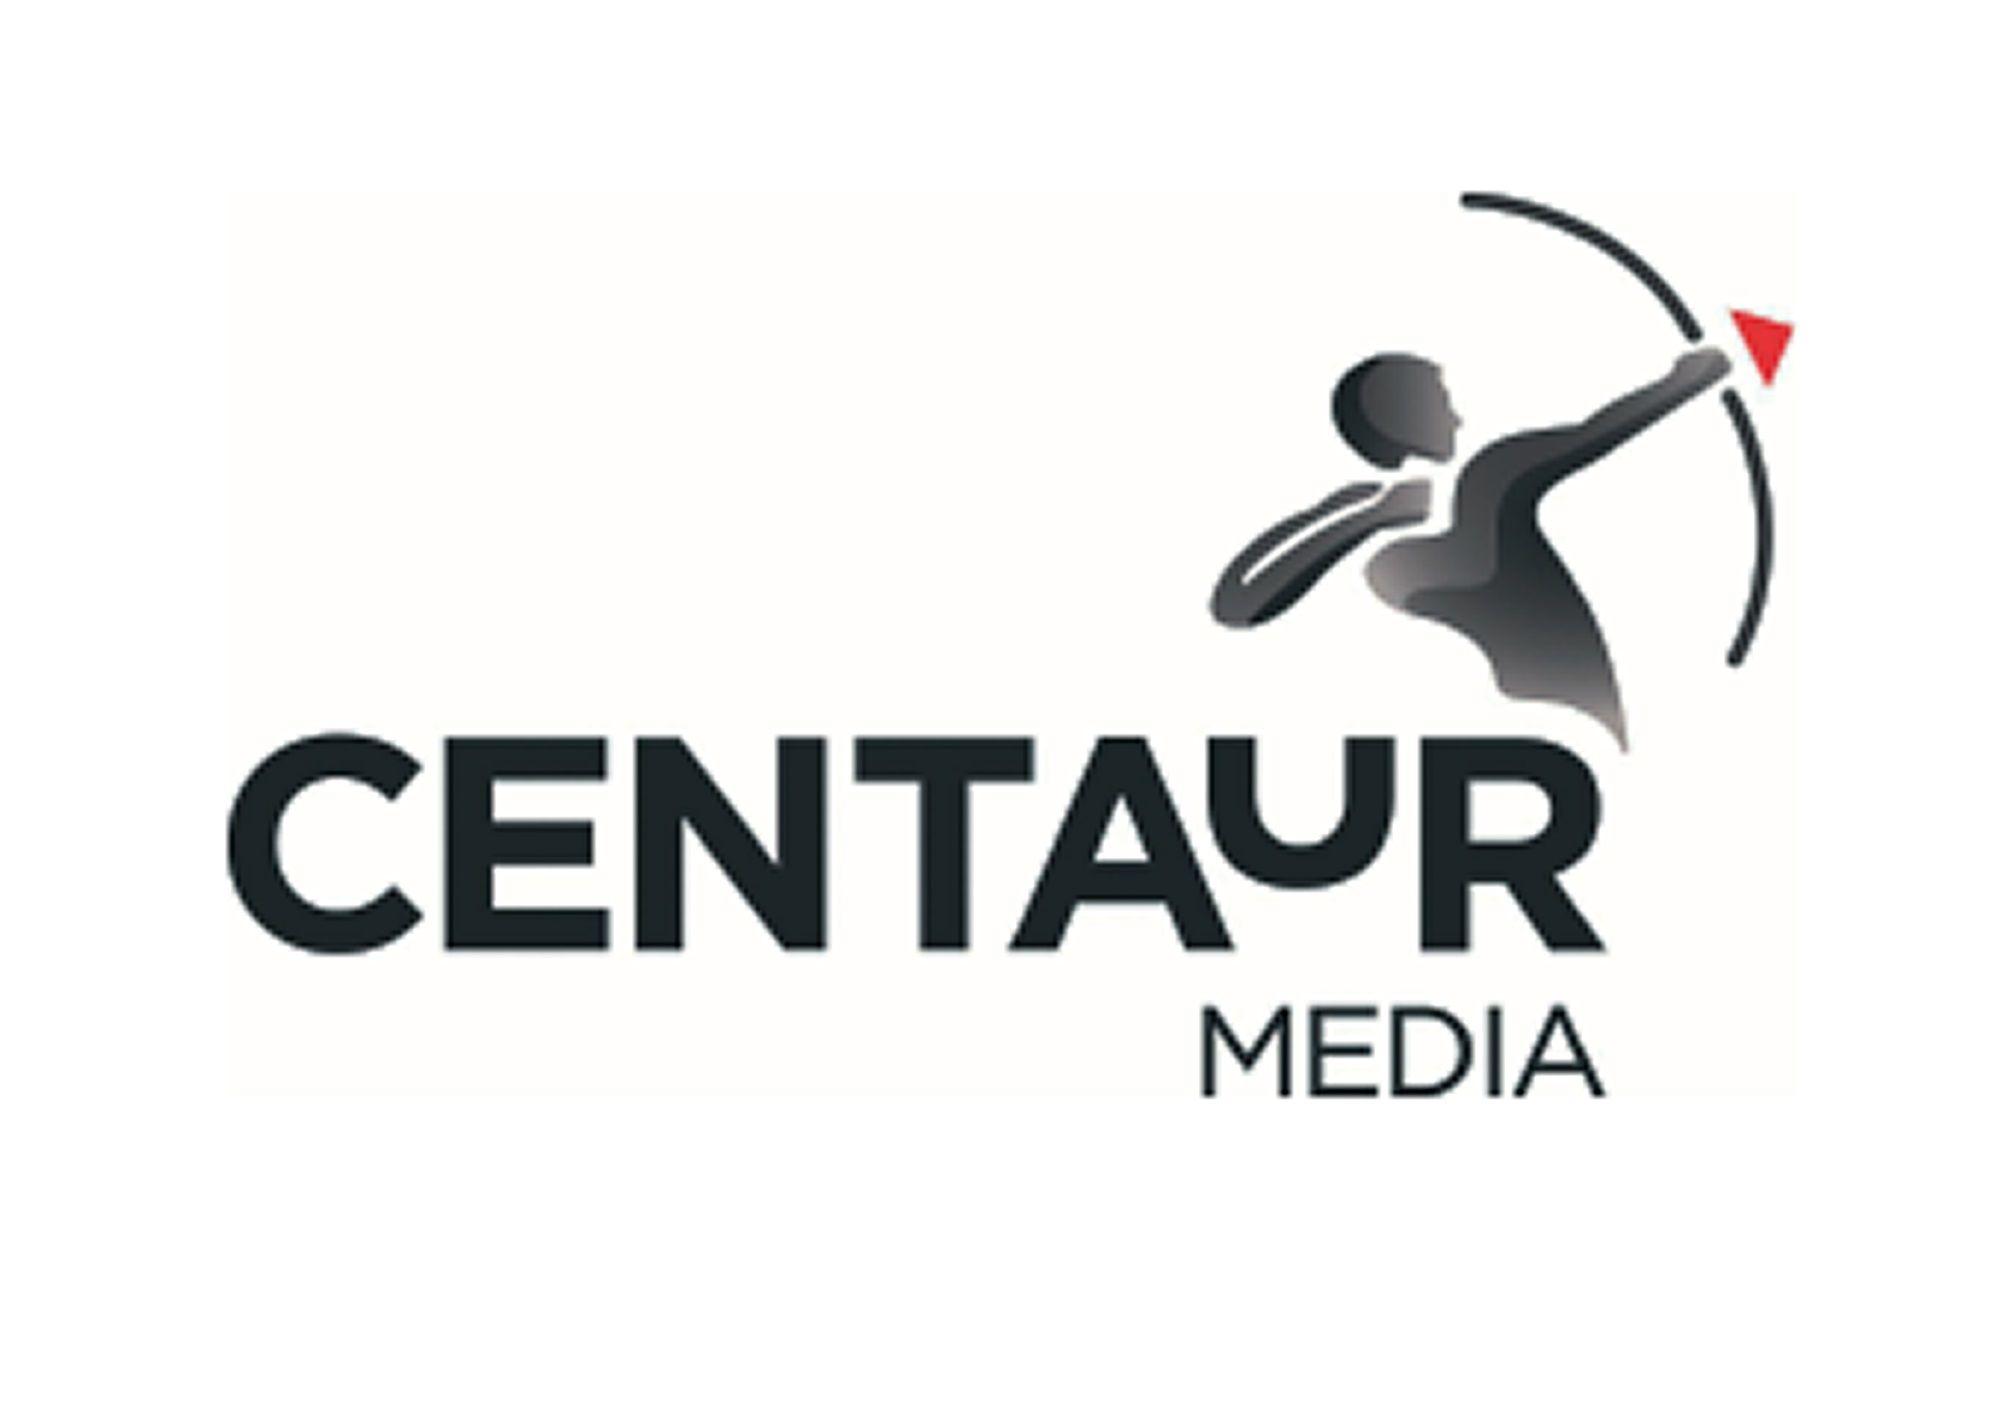 Centaur Logo - Circulation management and marketing for Centaur